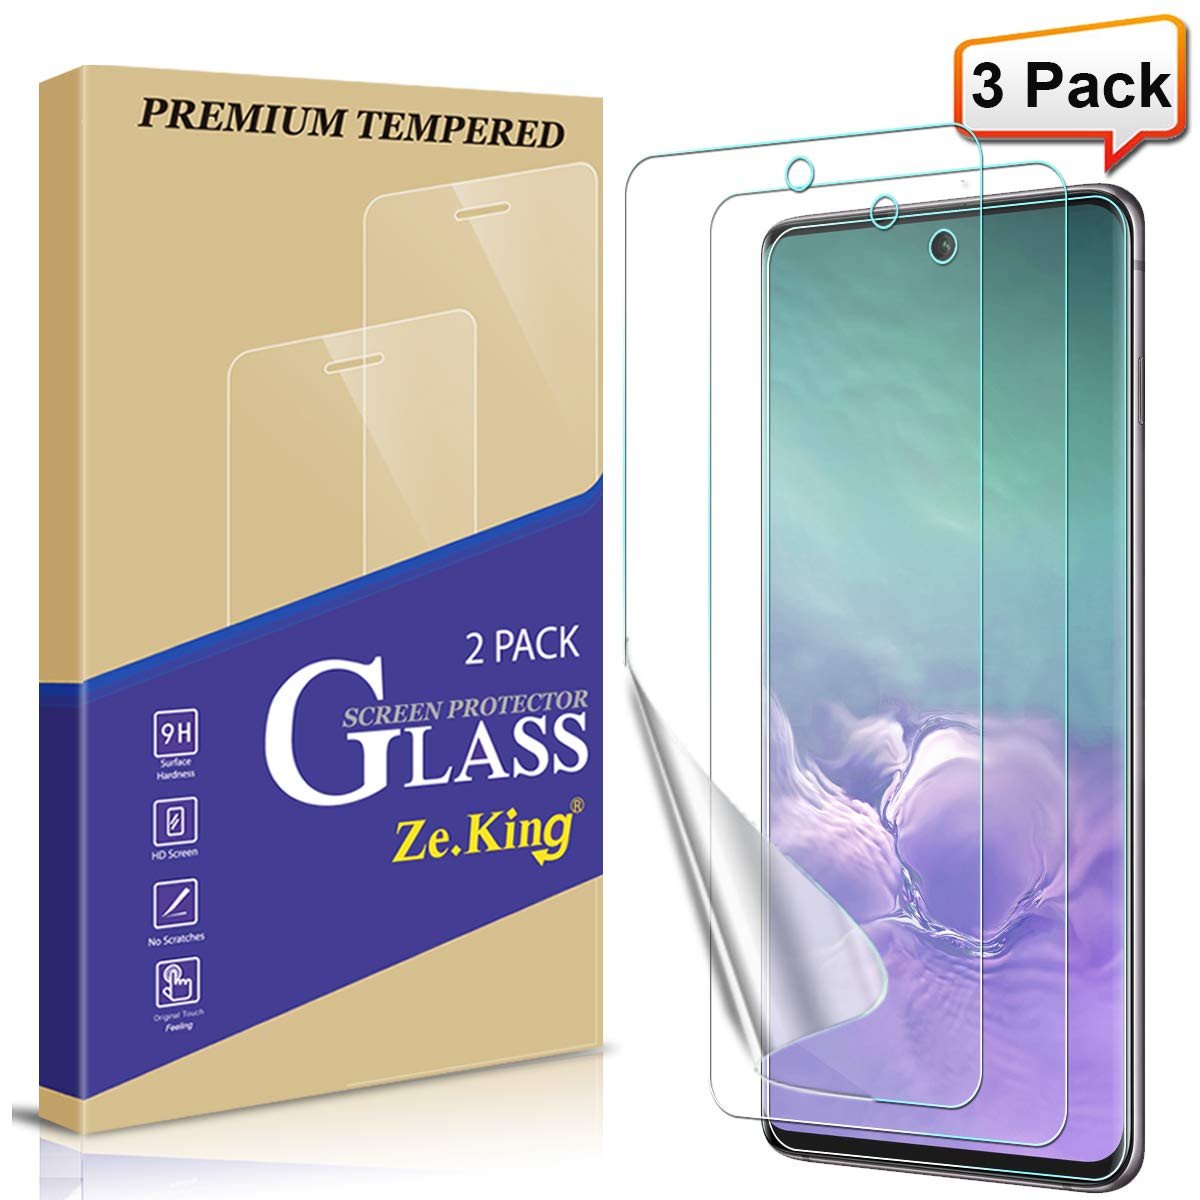 Zeking Galaxy S20+ screen protectors